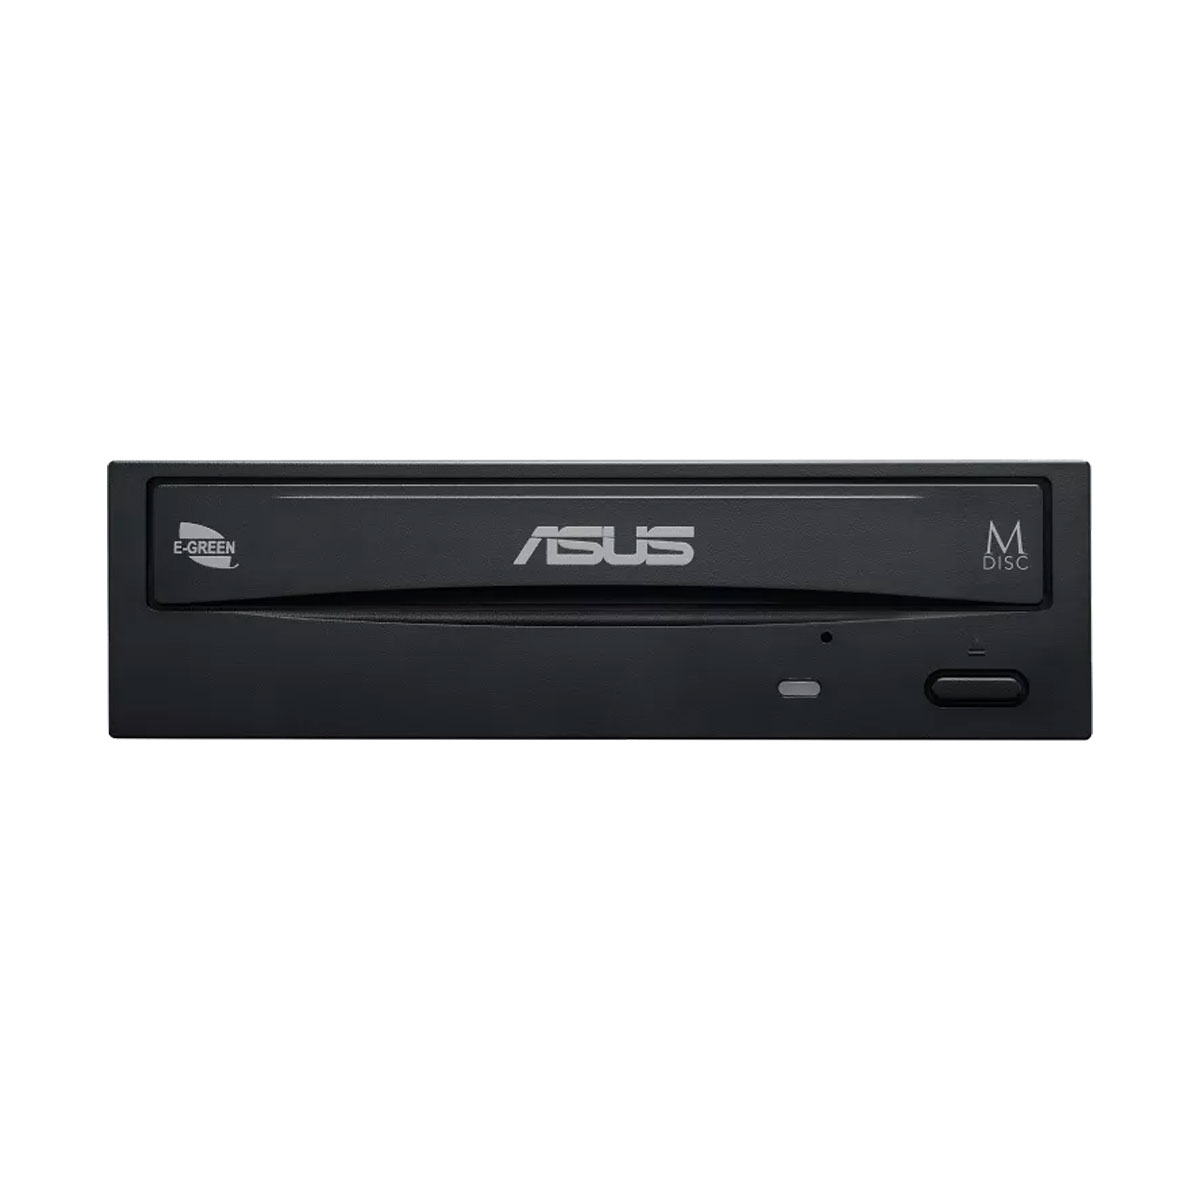 Asus DVD Writer DRW-24D5MT